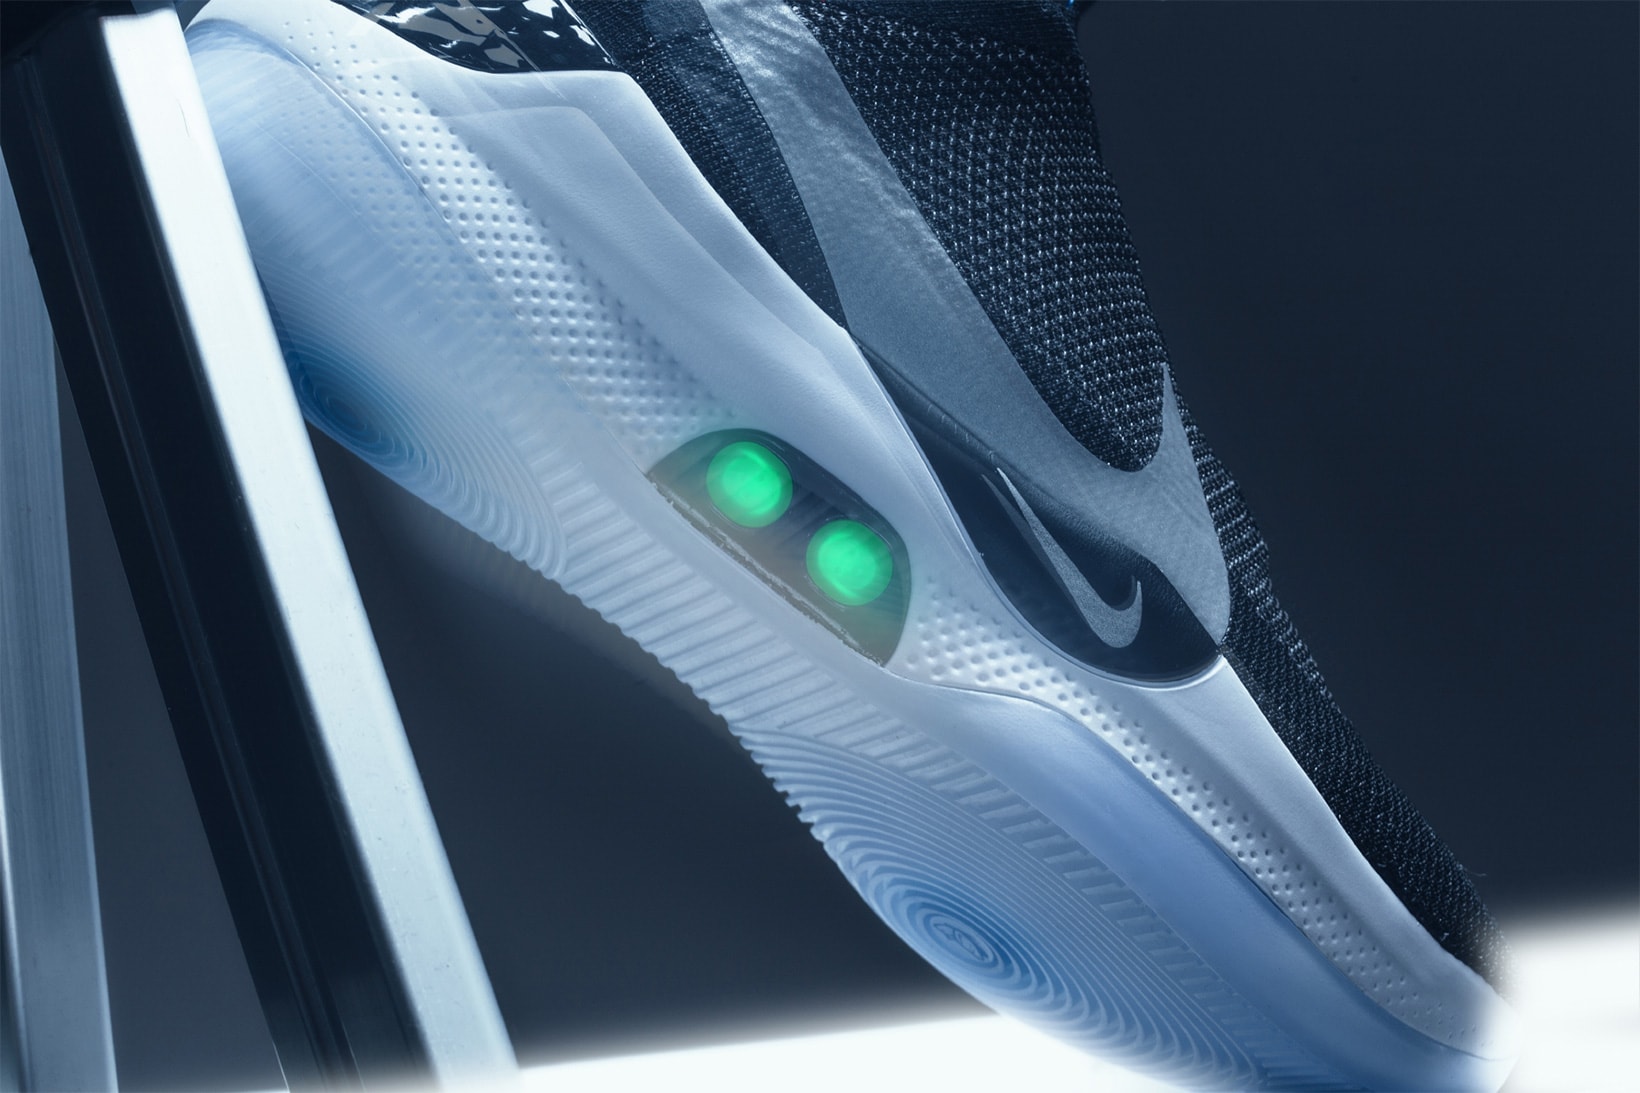 nike self lacing adapt bb reflective silver photo blue basketball shoe sneaker technology